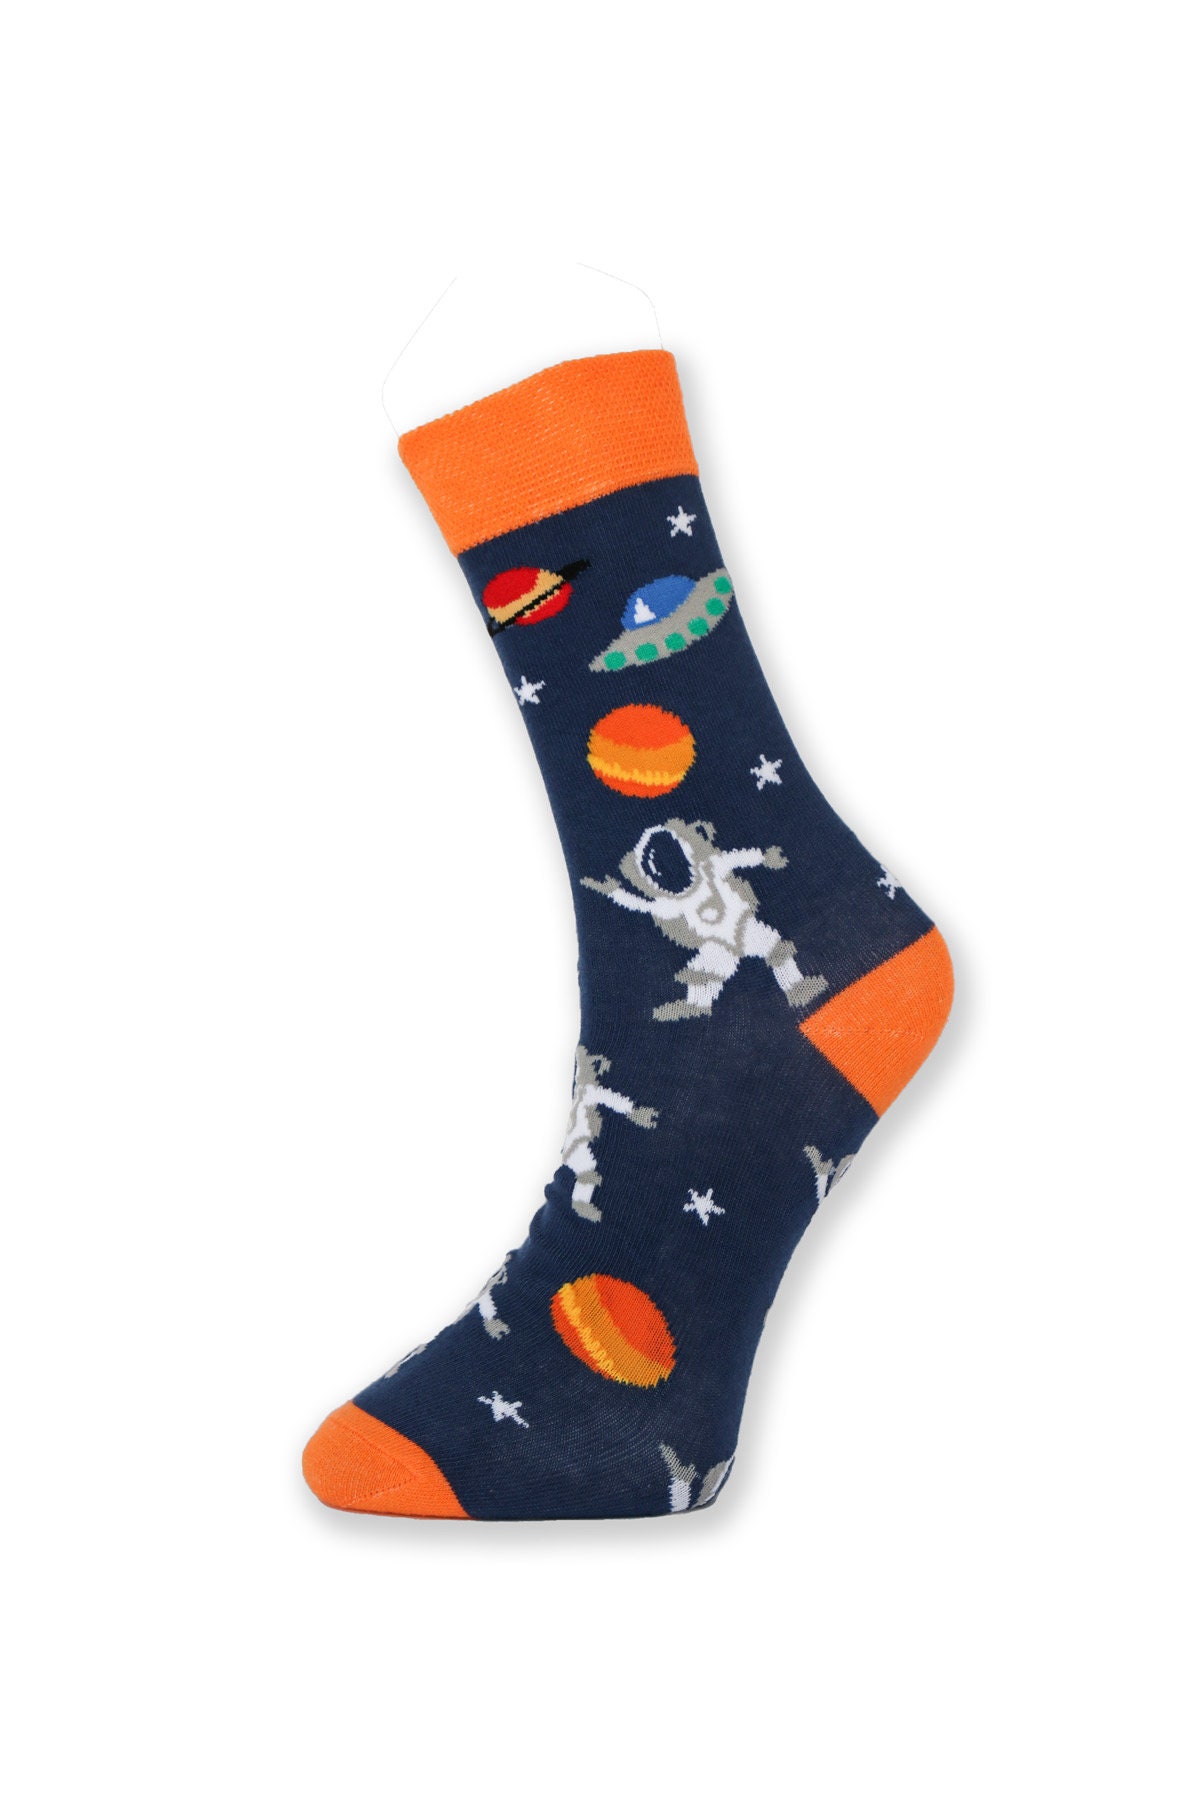 Space Socks 5 Pack Socks With GIFT BOX Christmas Socks for Men Colorful ...